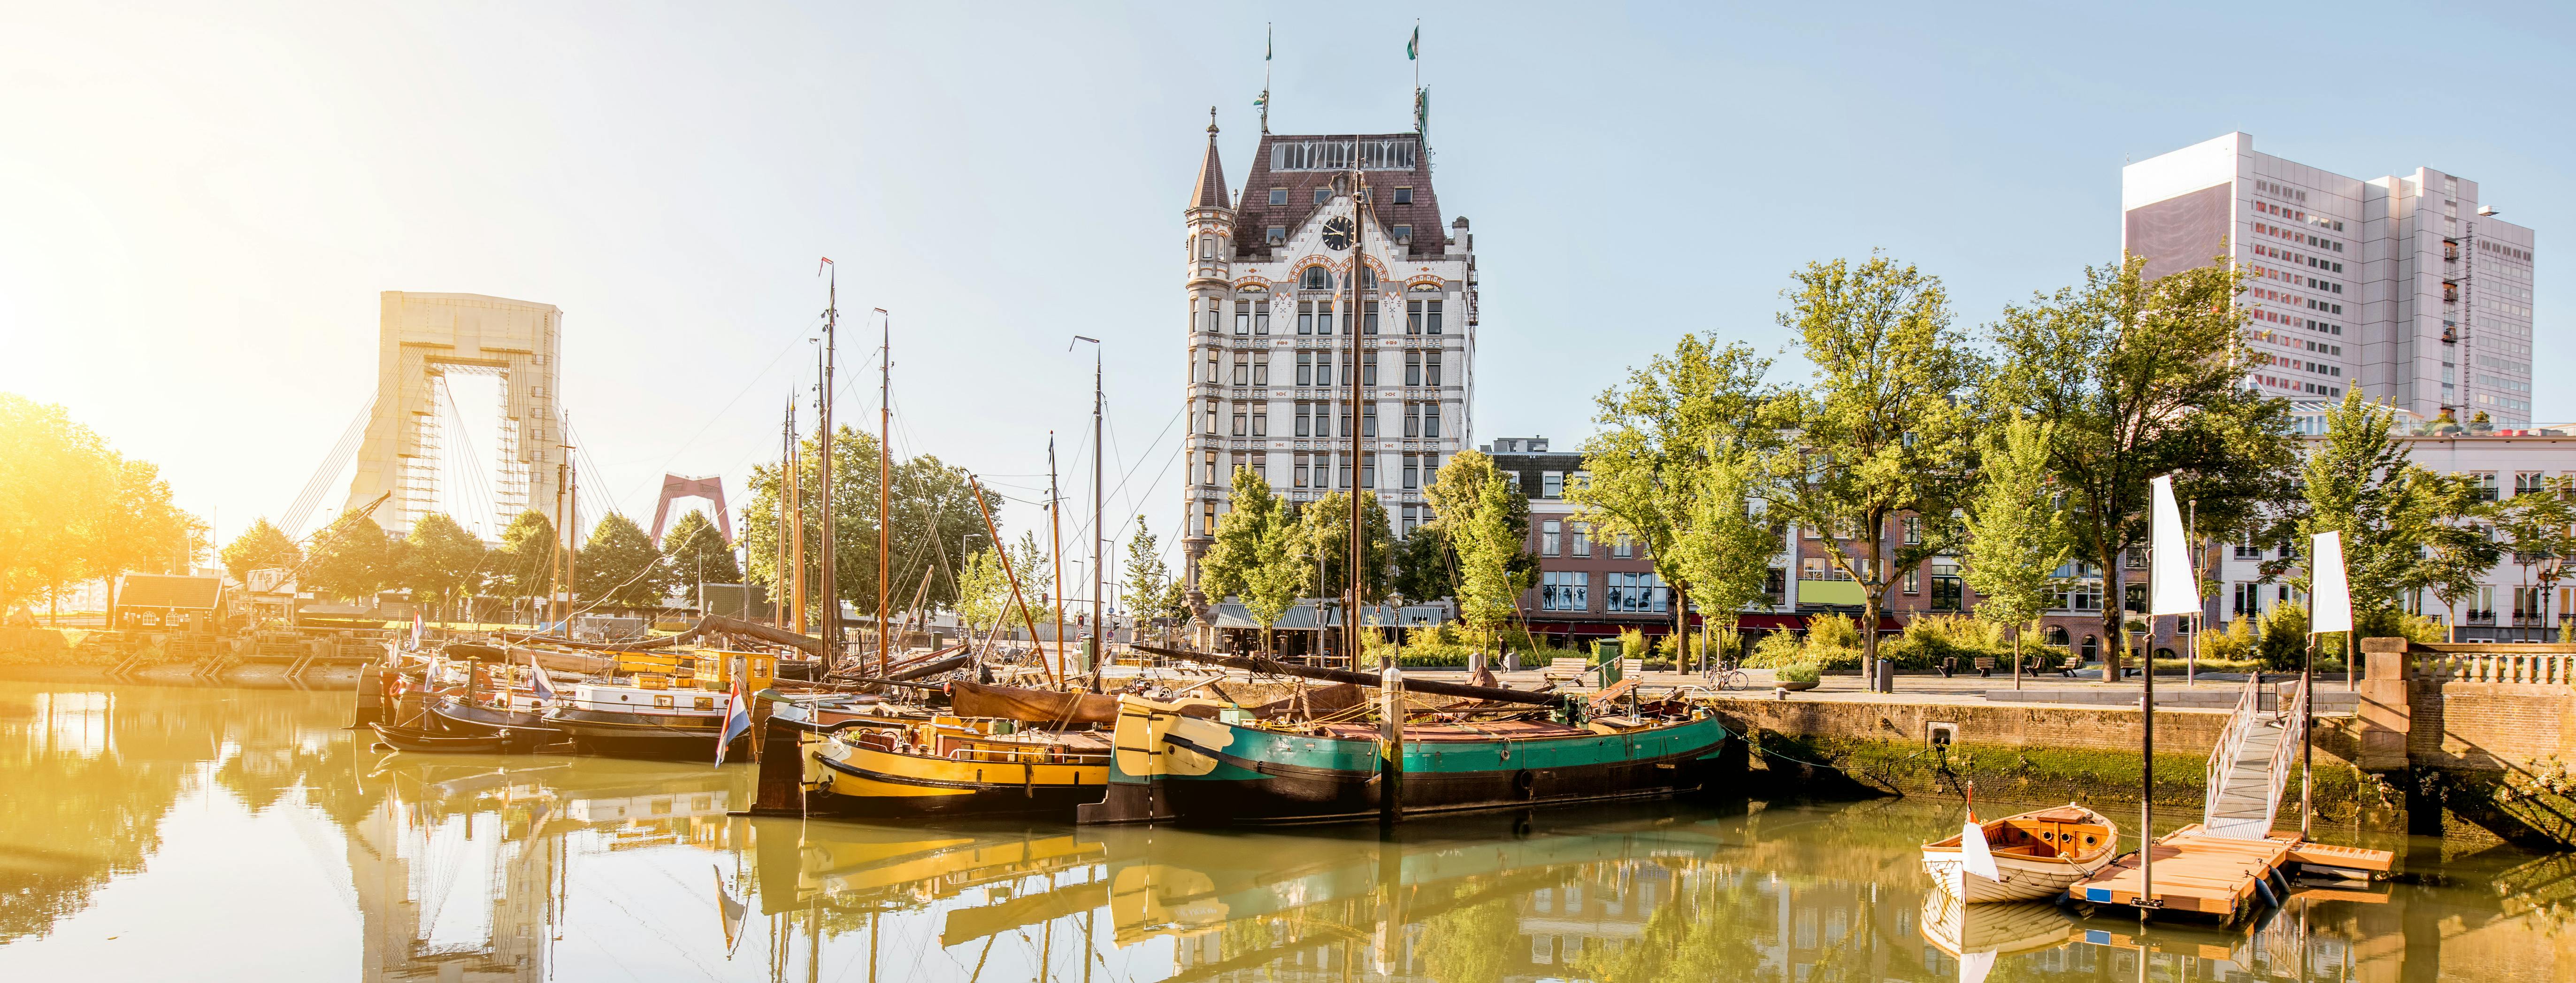 Vieux port de Rotterdam